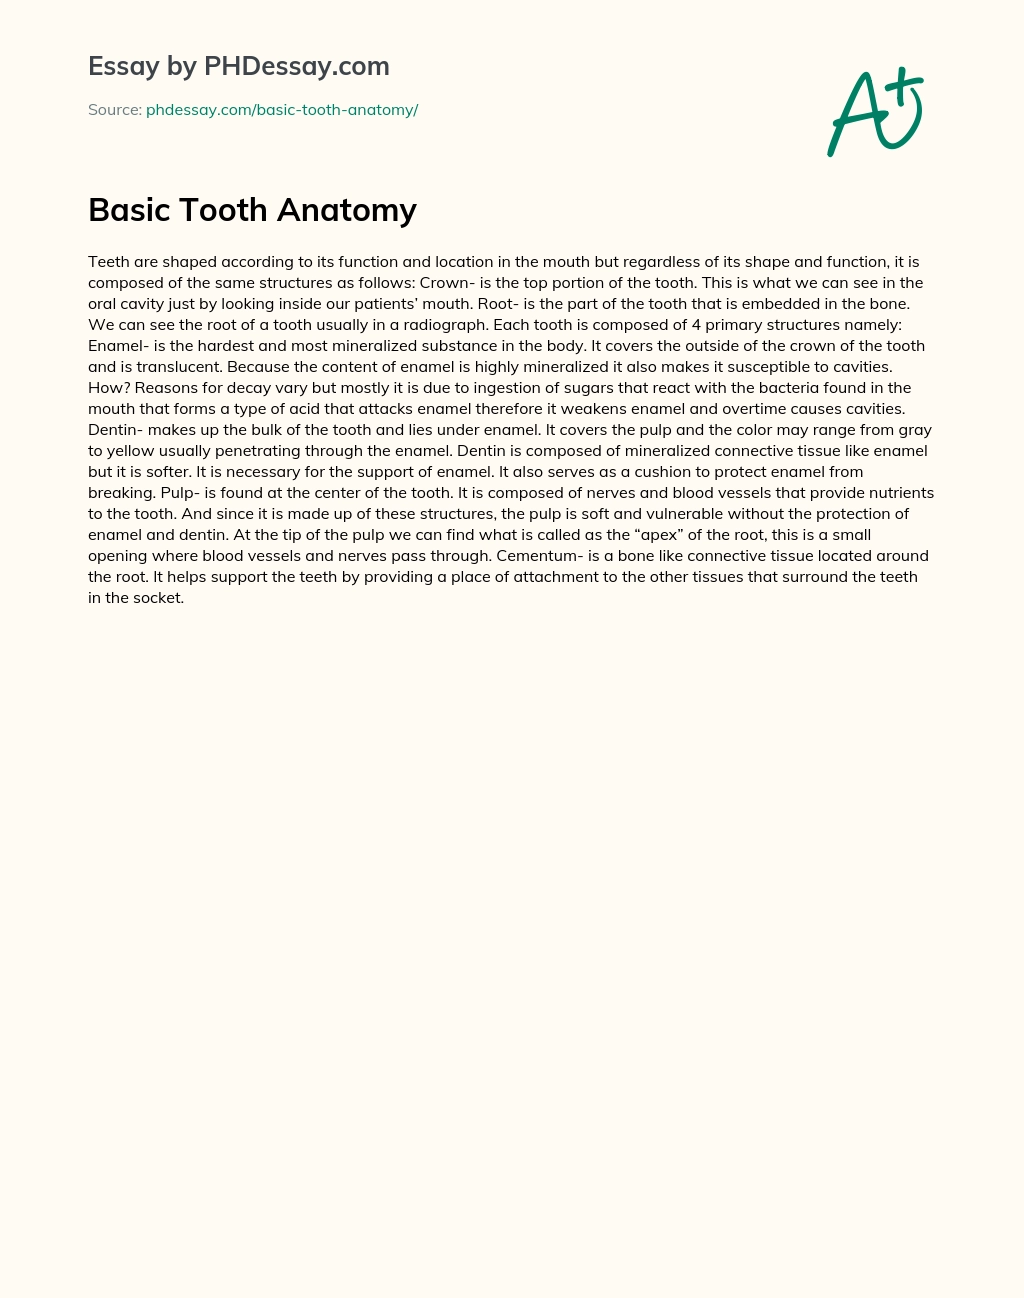 Basic Tooth Anatomy essay